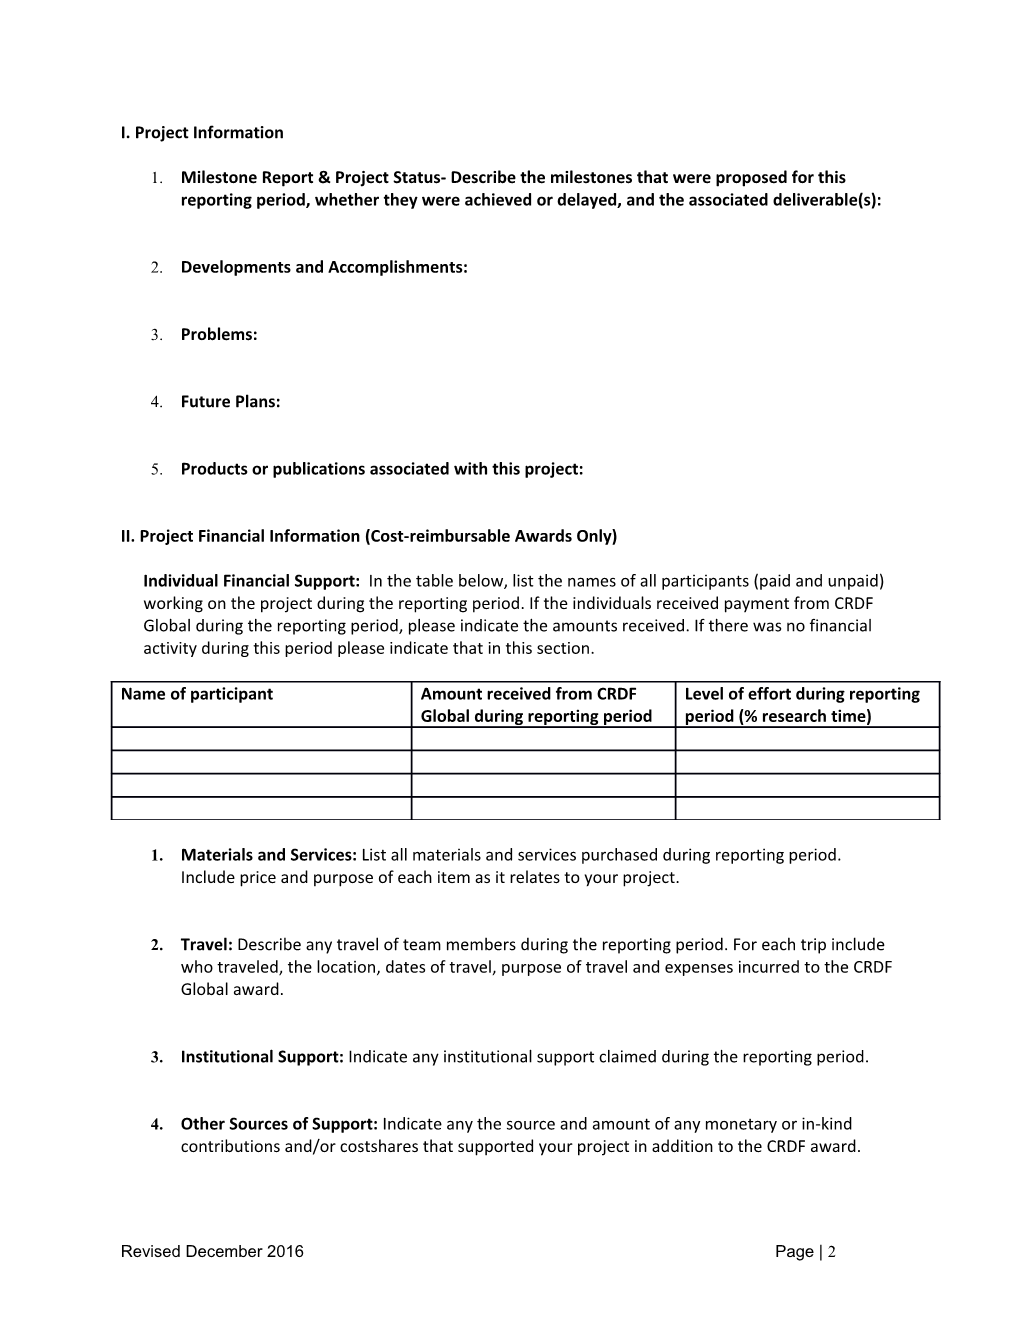 Form 710: Standard Project Status Report - Variant CGP01